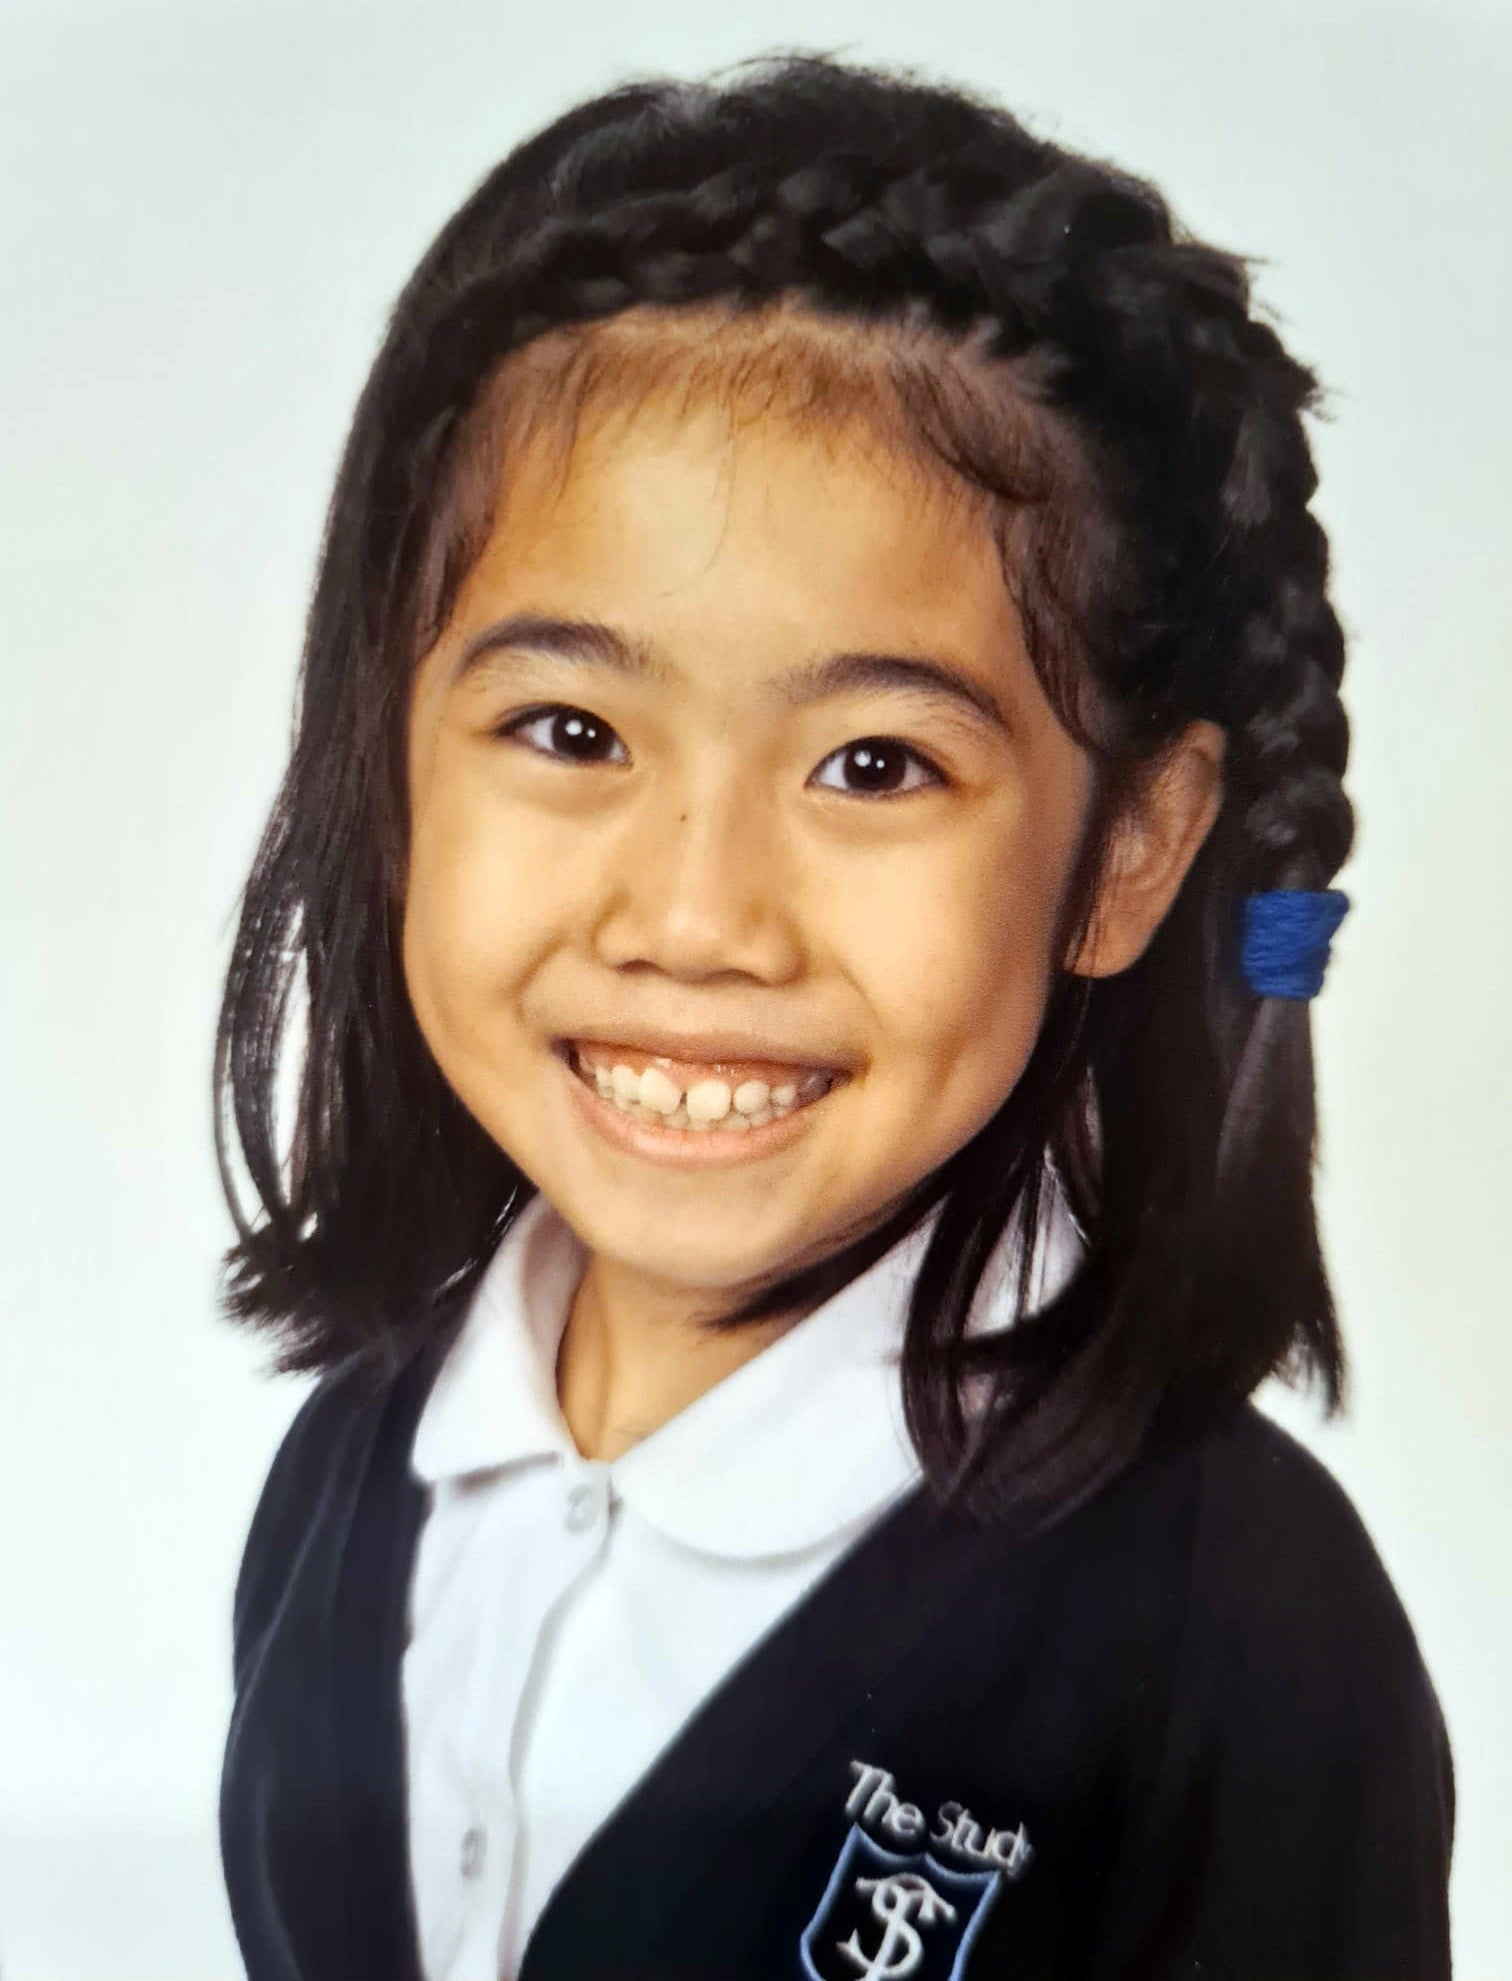 Eight-year-old Selena Lau